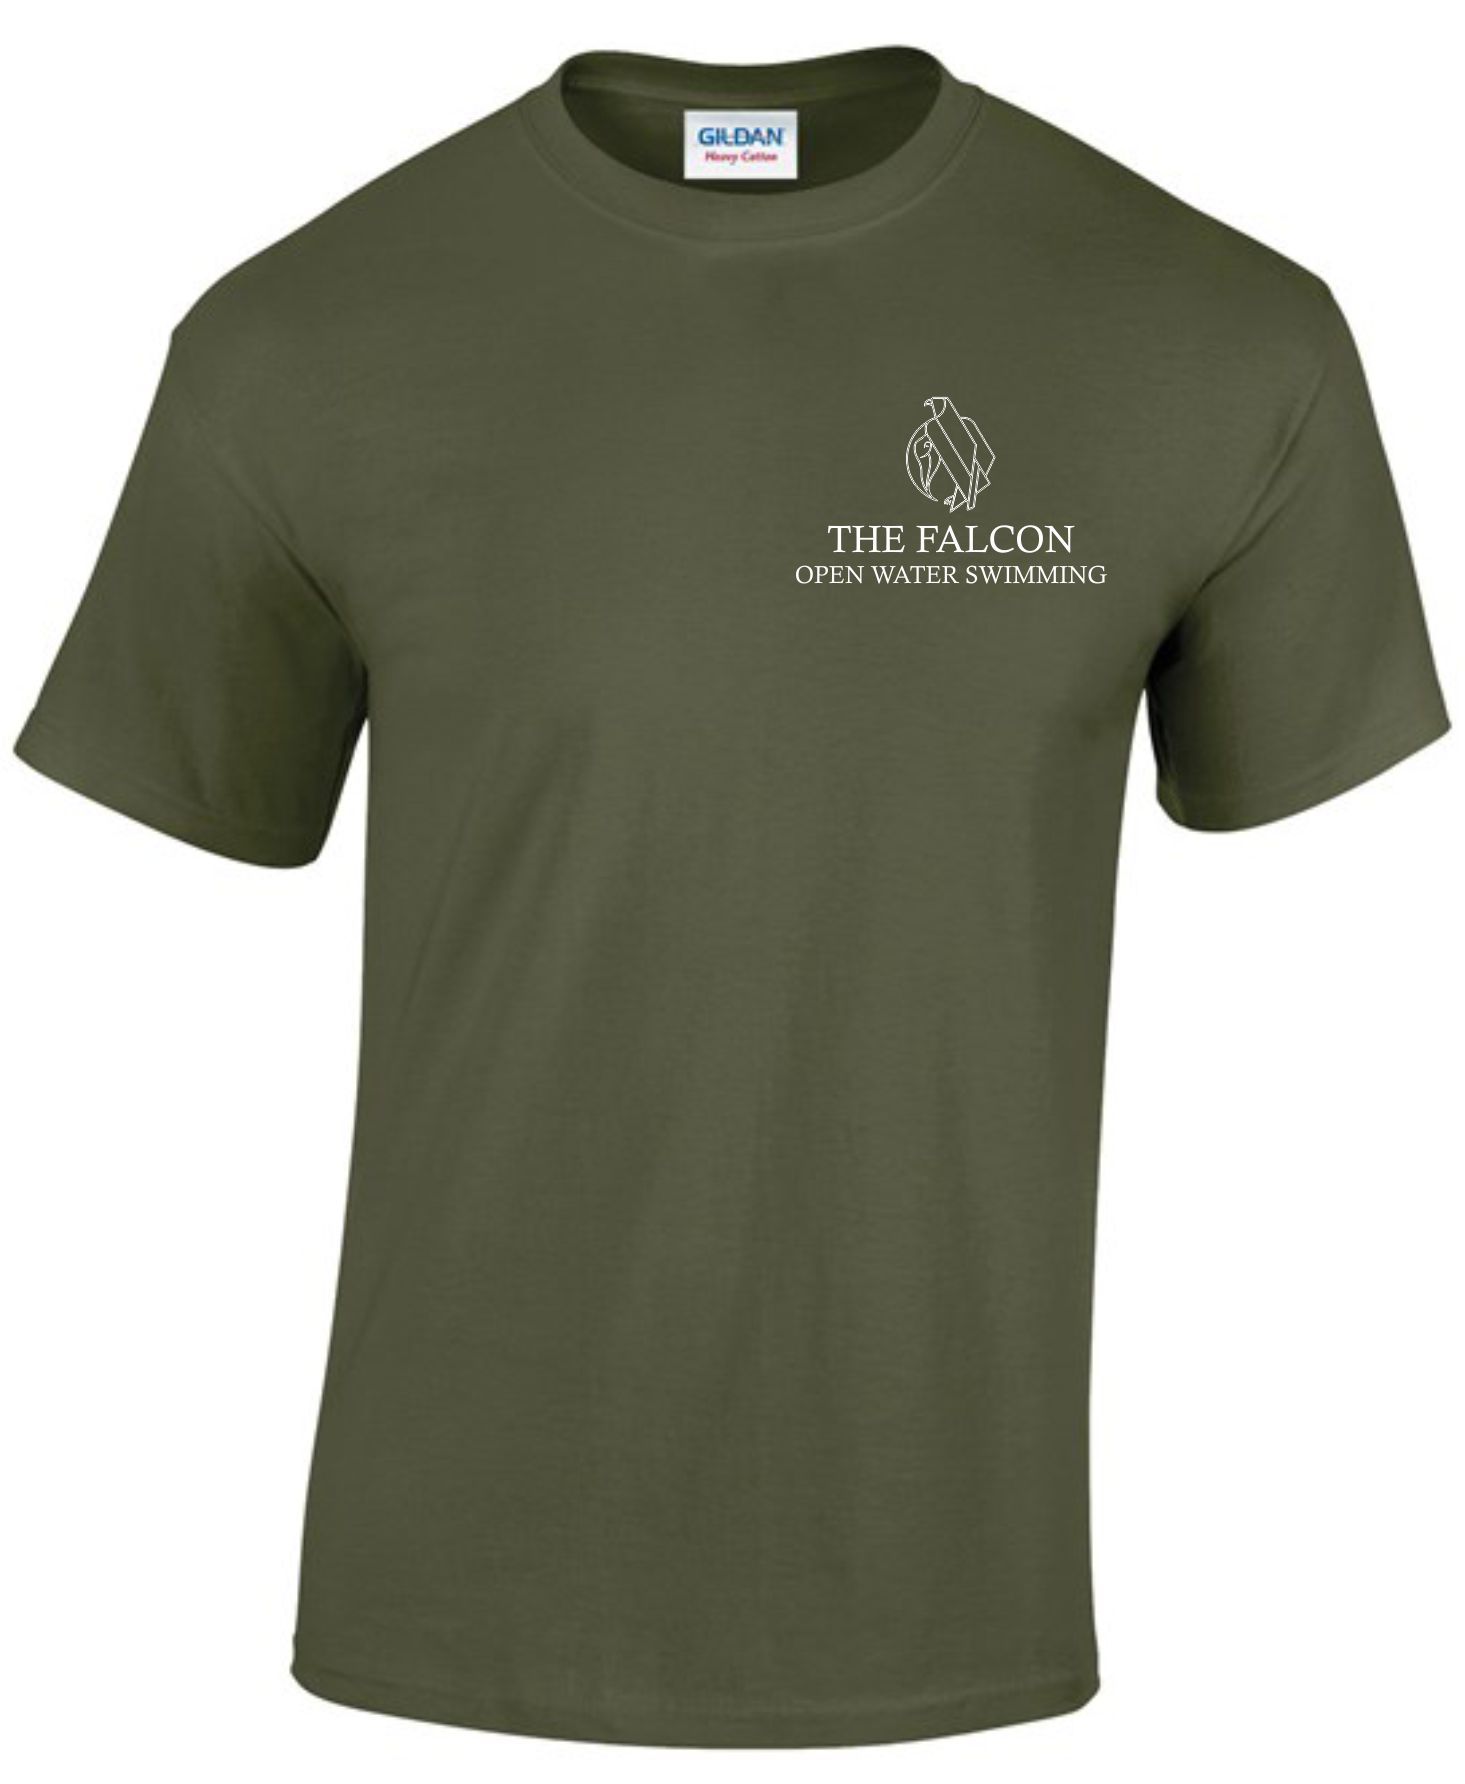 The Falcon Open Water Swimming - Standard Green Falcon T-Shirt (Unisex)